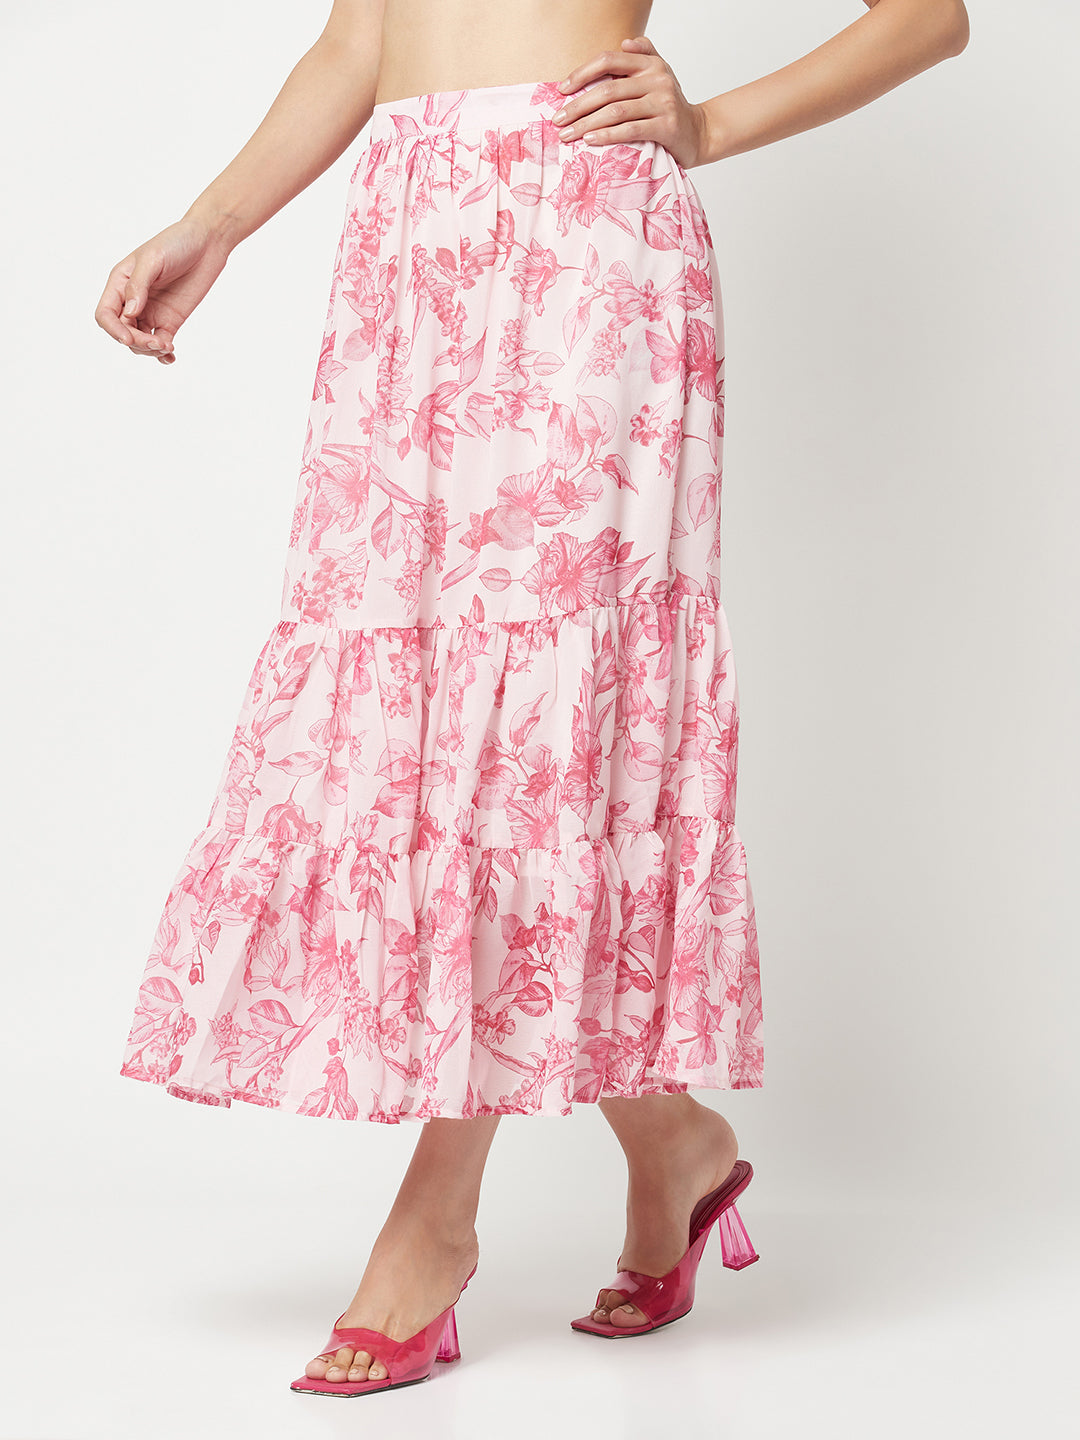 Pink Floral A-Line Skirt